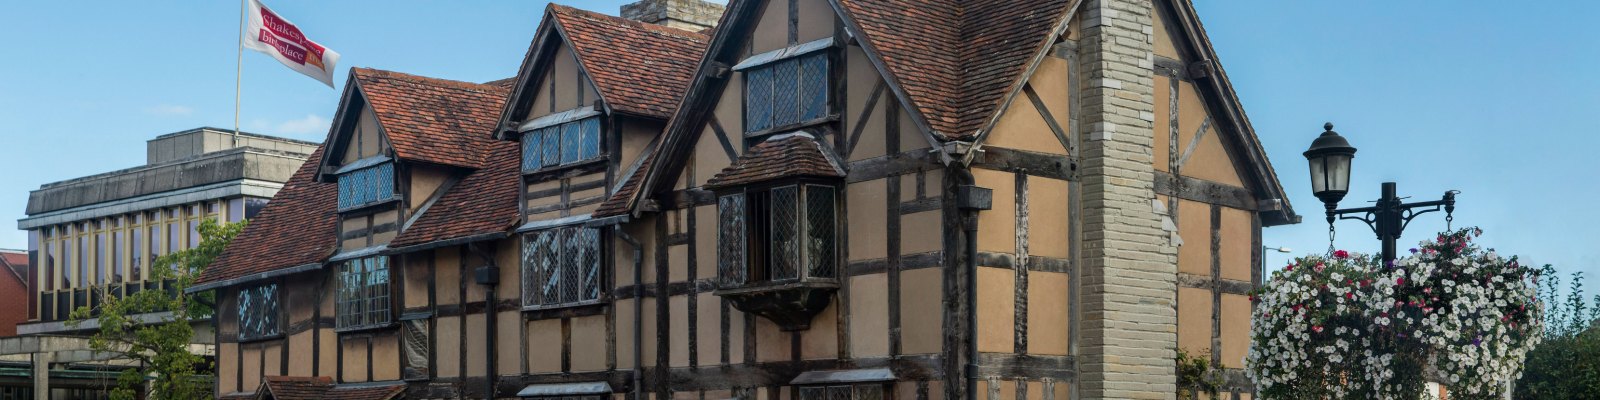 Shakespeare's home, Stratford-upon-avon